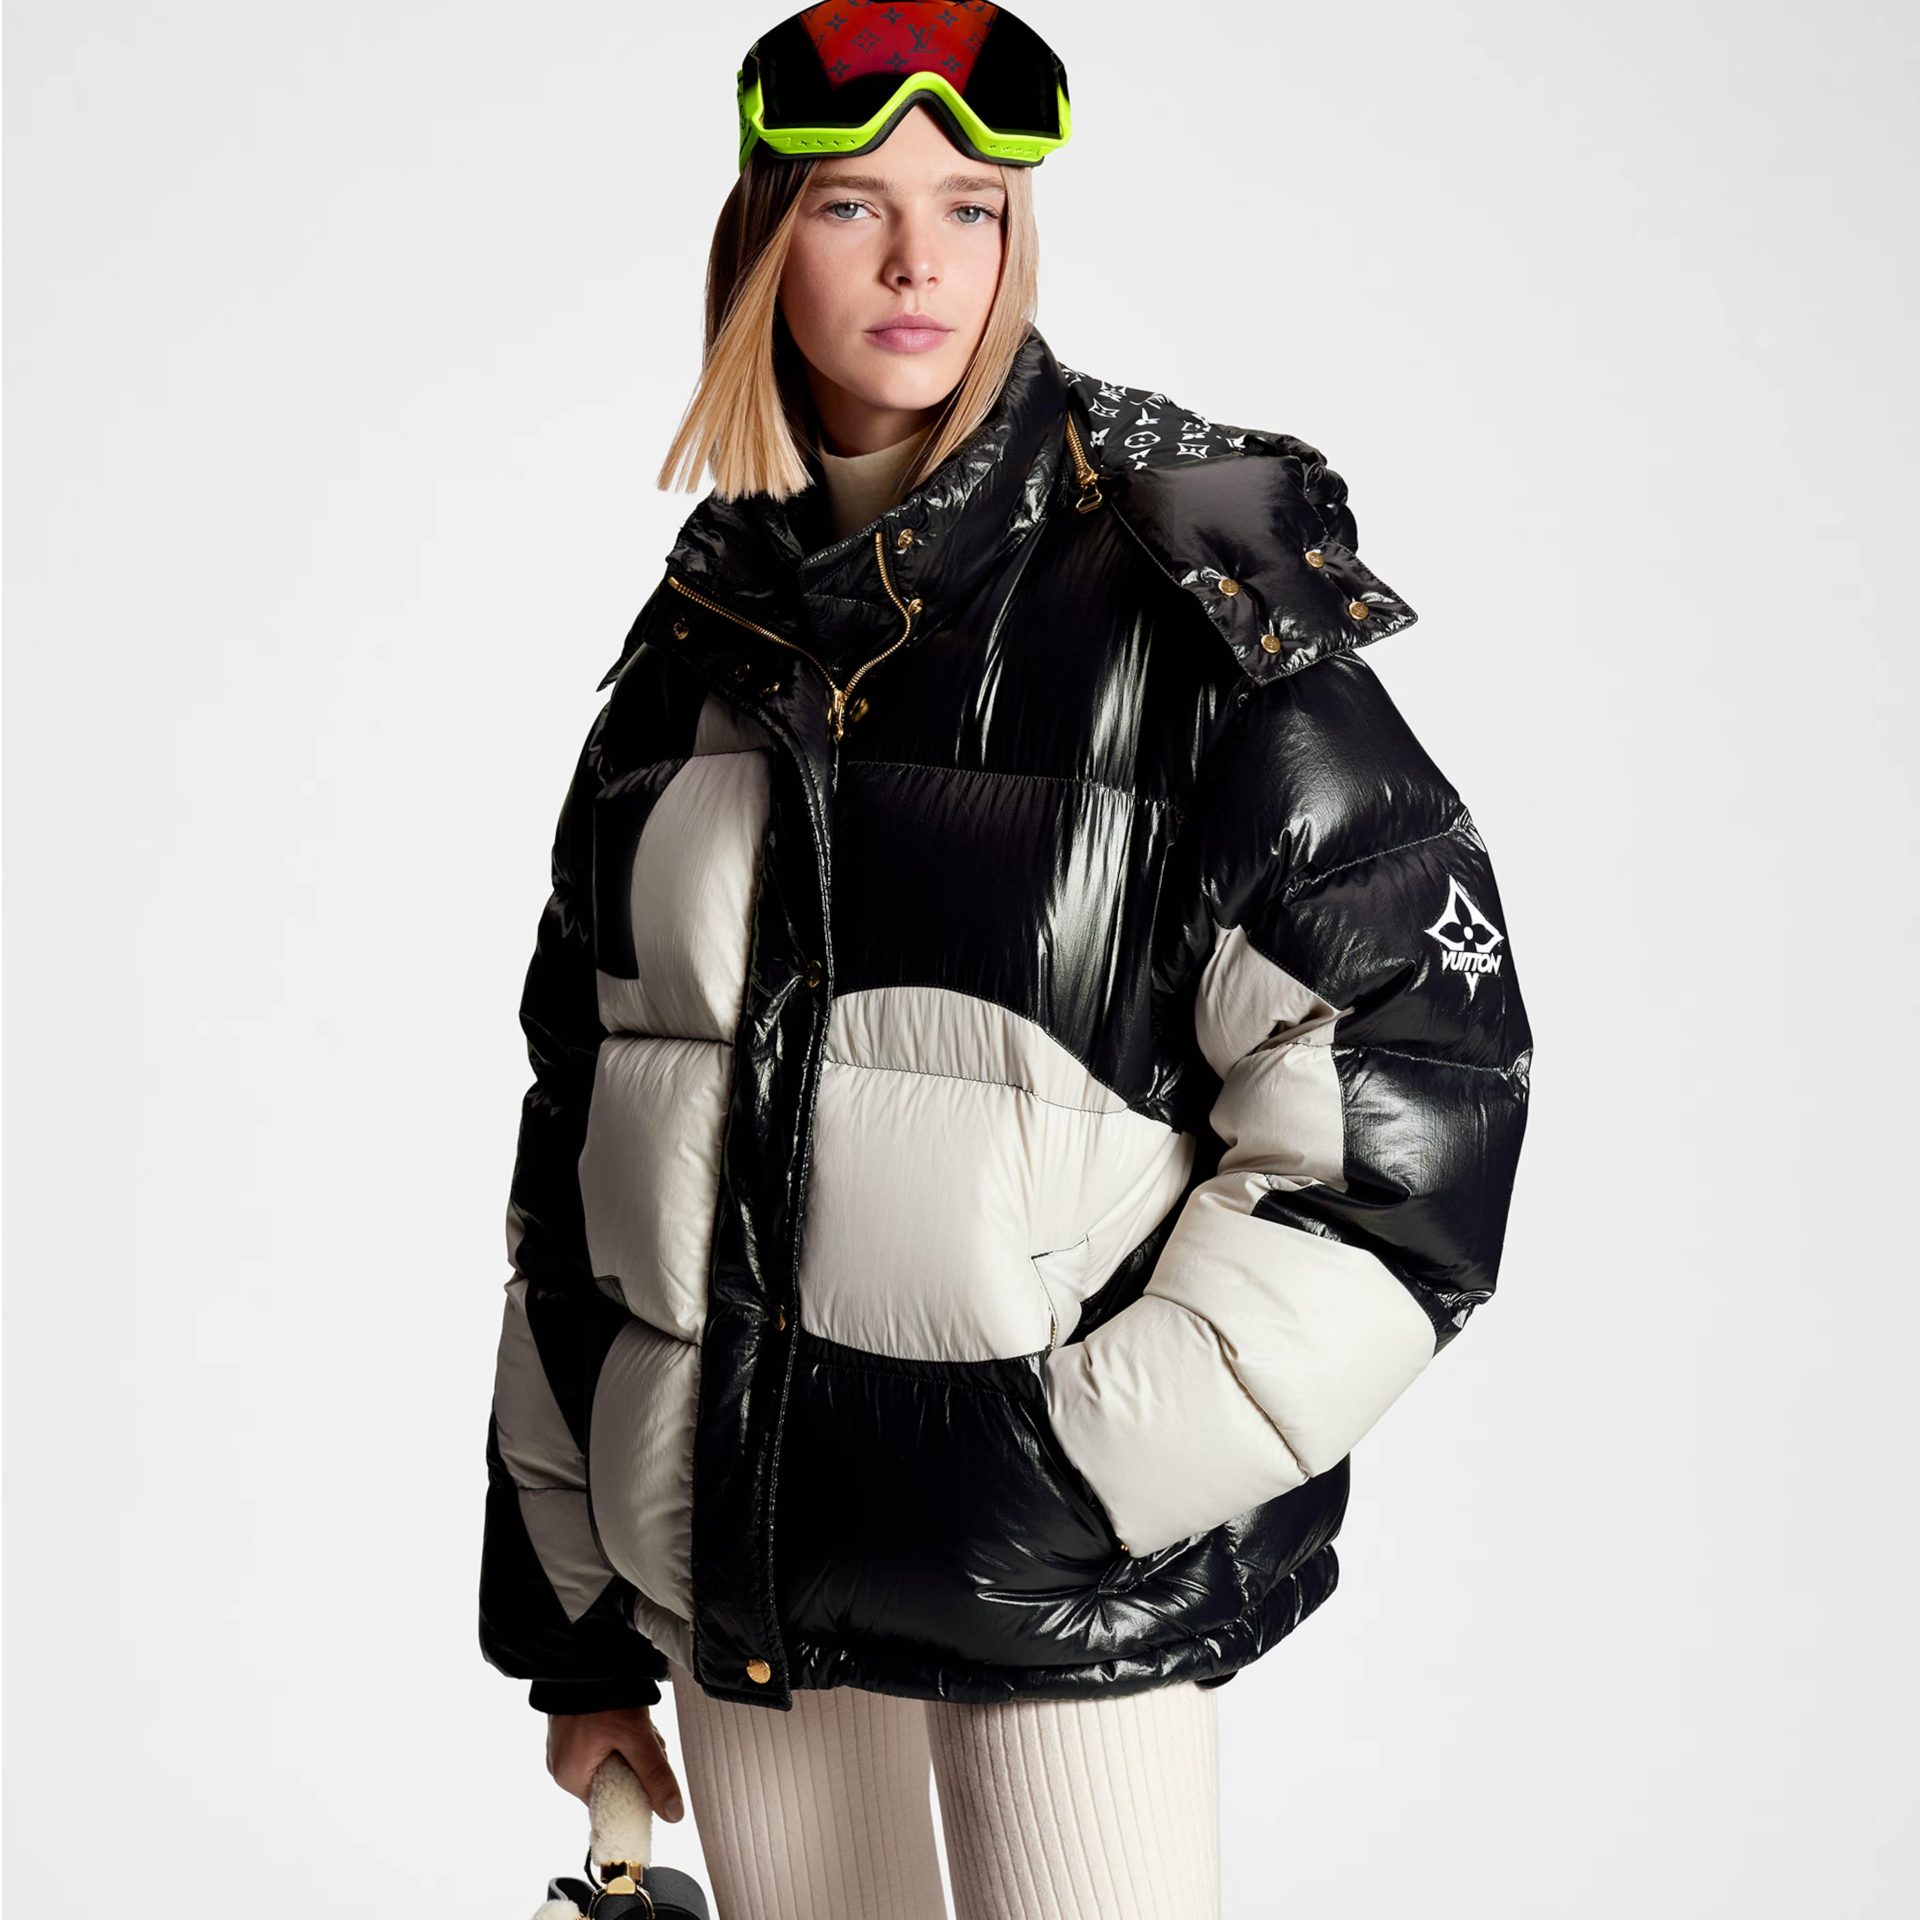 Louis Vuitton: Louis Vuitton Introduces Its New LV Ski Collection